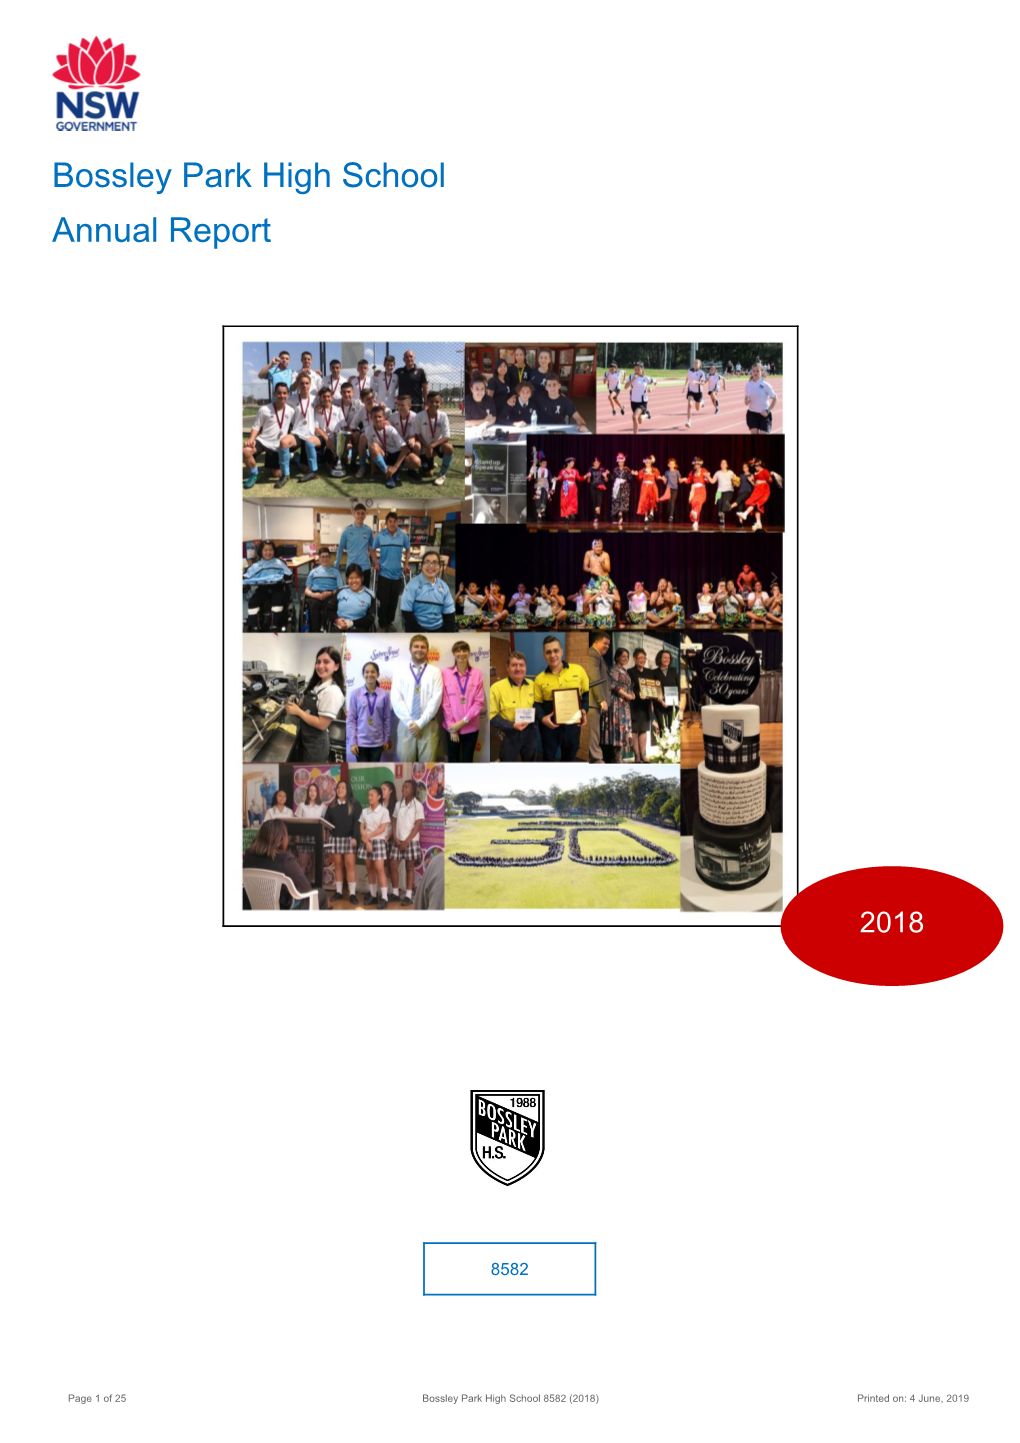 Bossley Park High School Annual Report